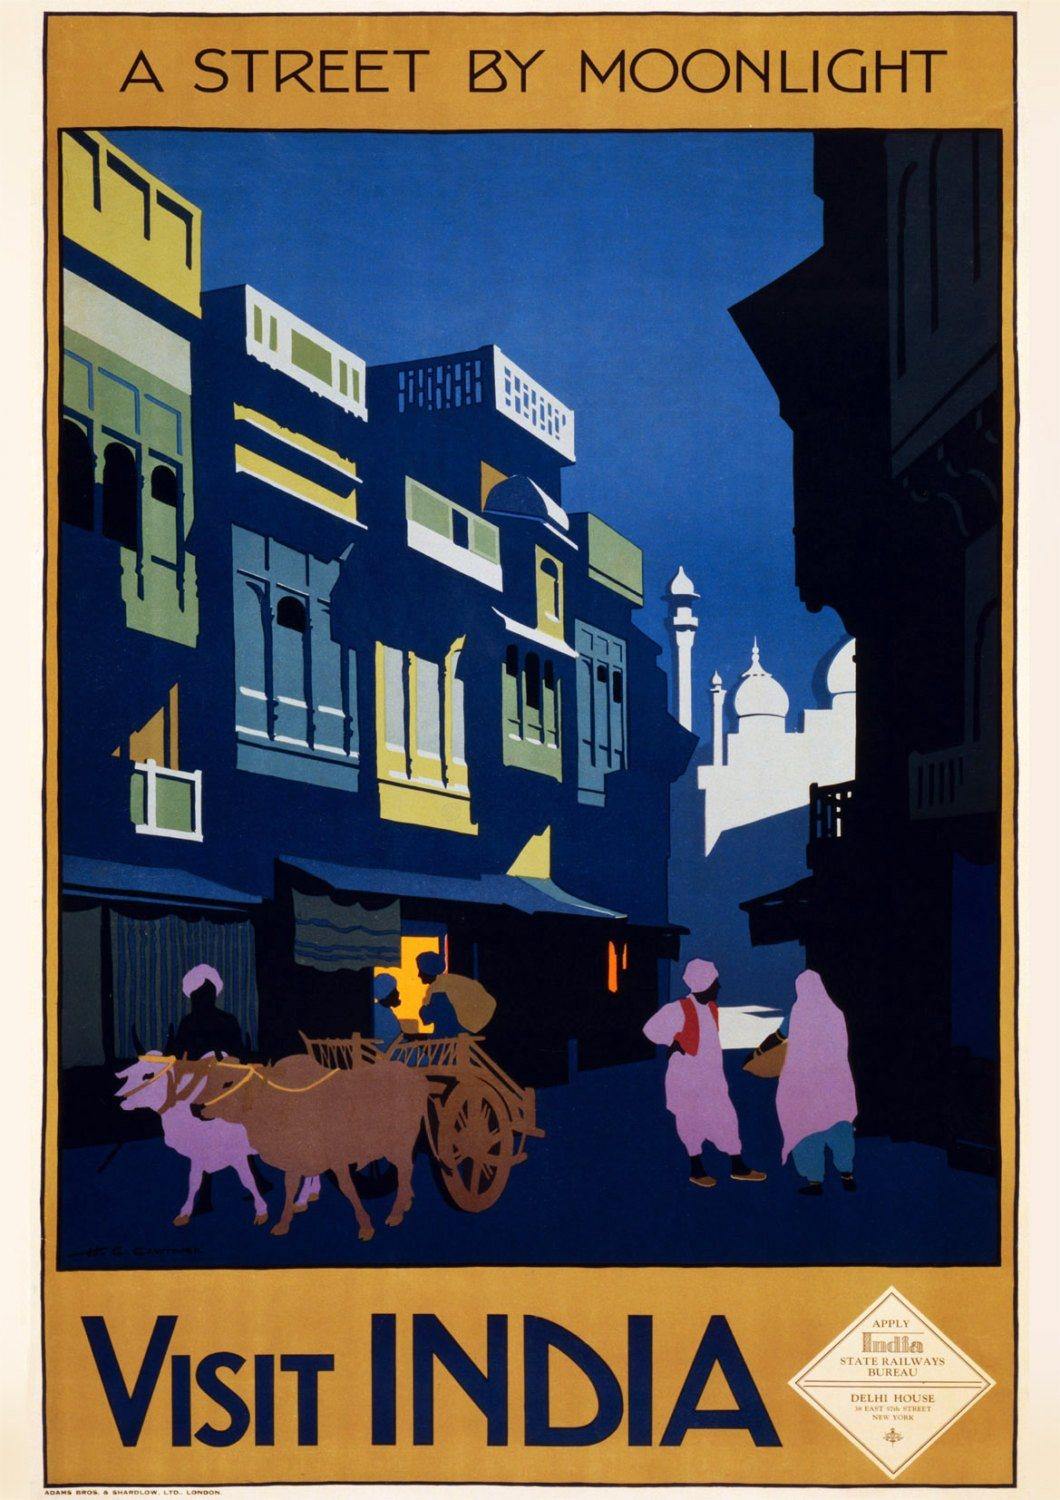 INDIA TRAVEL POSTER: Vintage Moonlight Street Print - Pimlico Prints